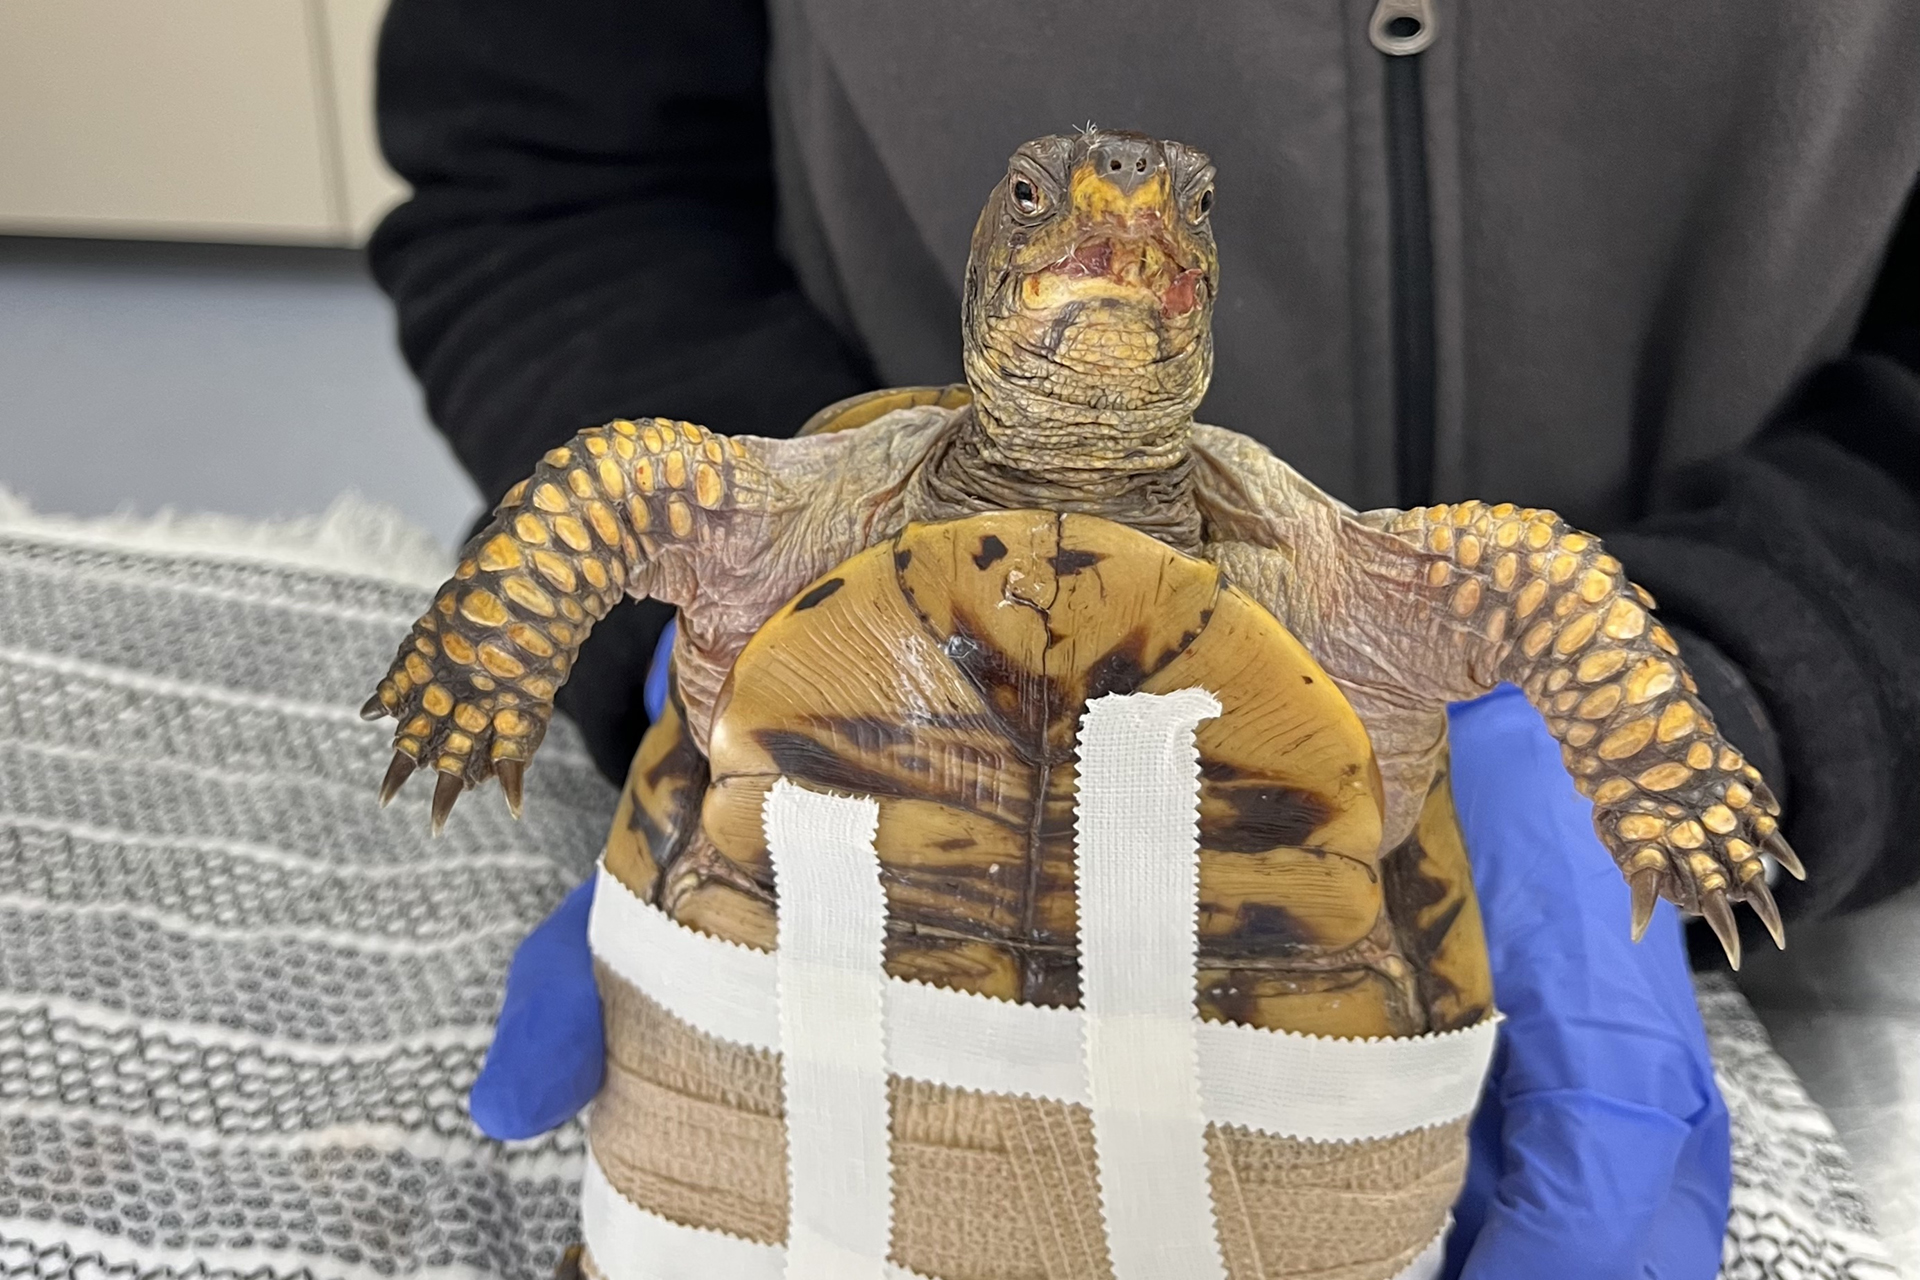 Box turtle ready for examination